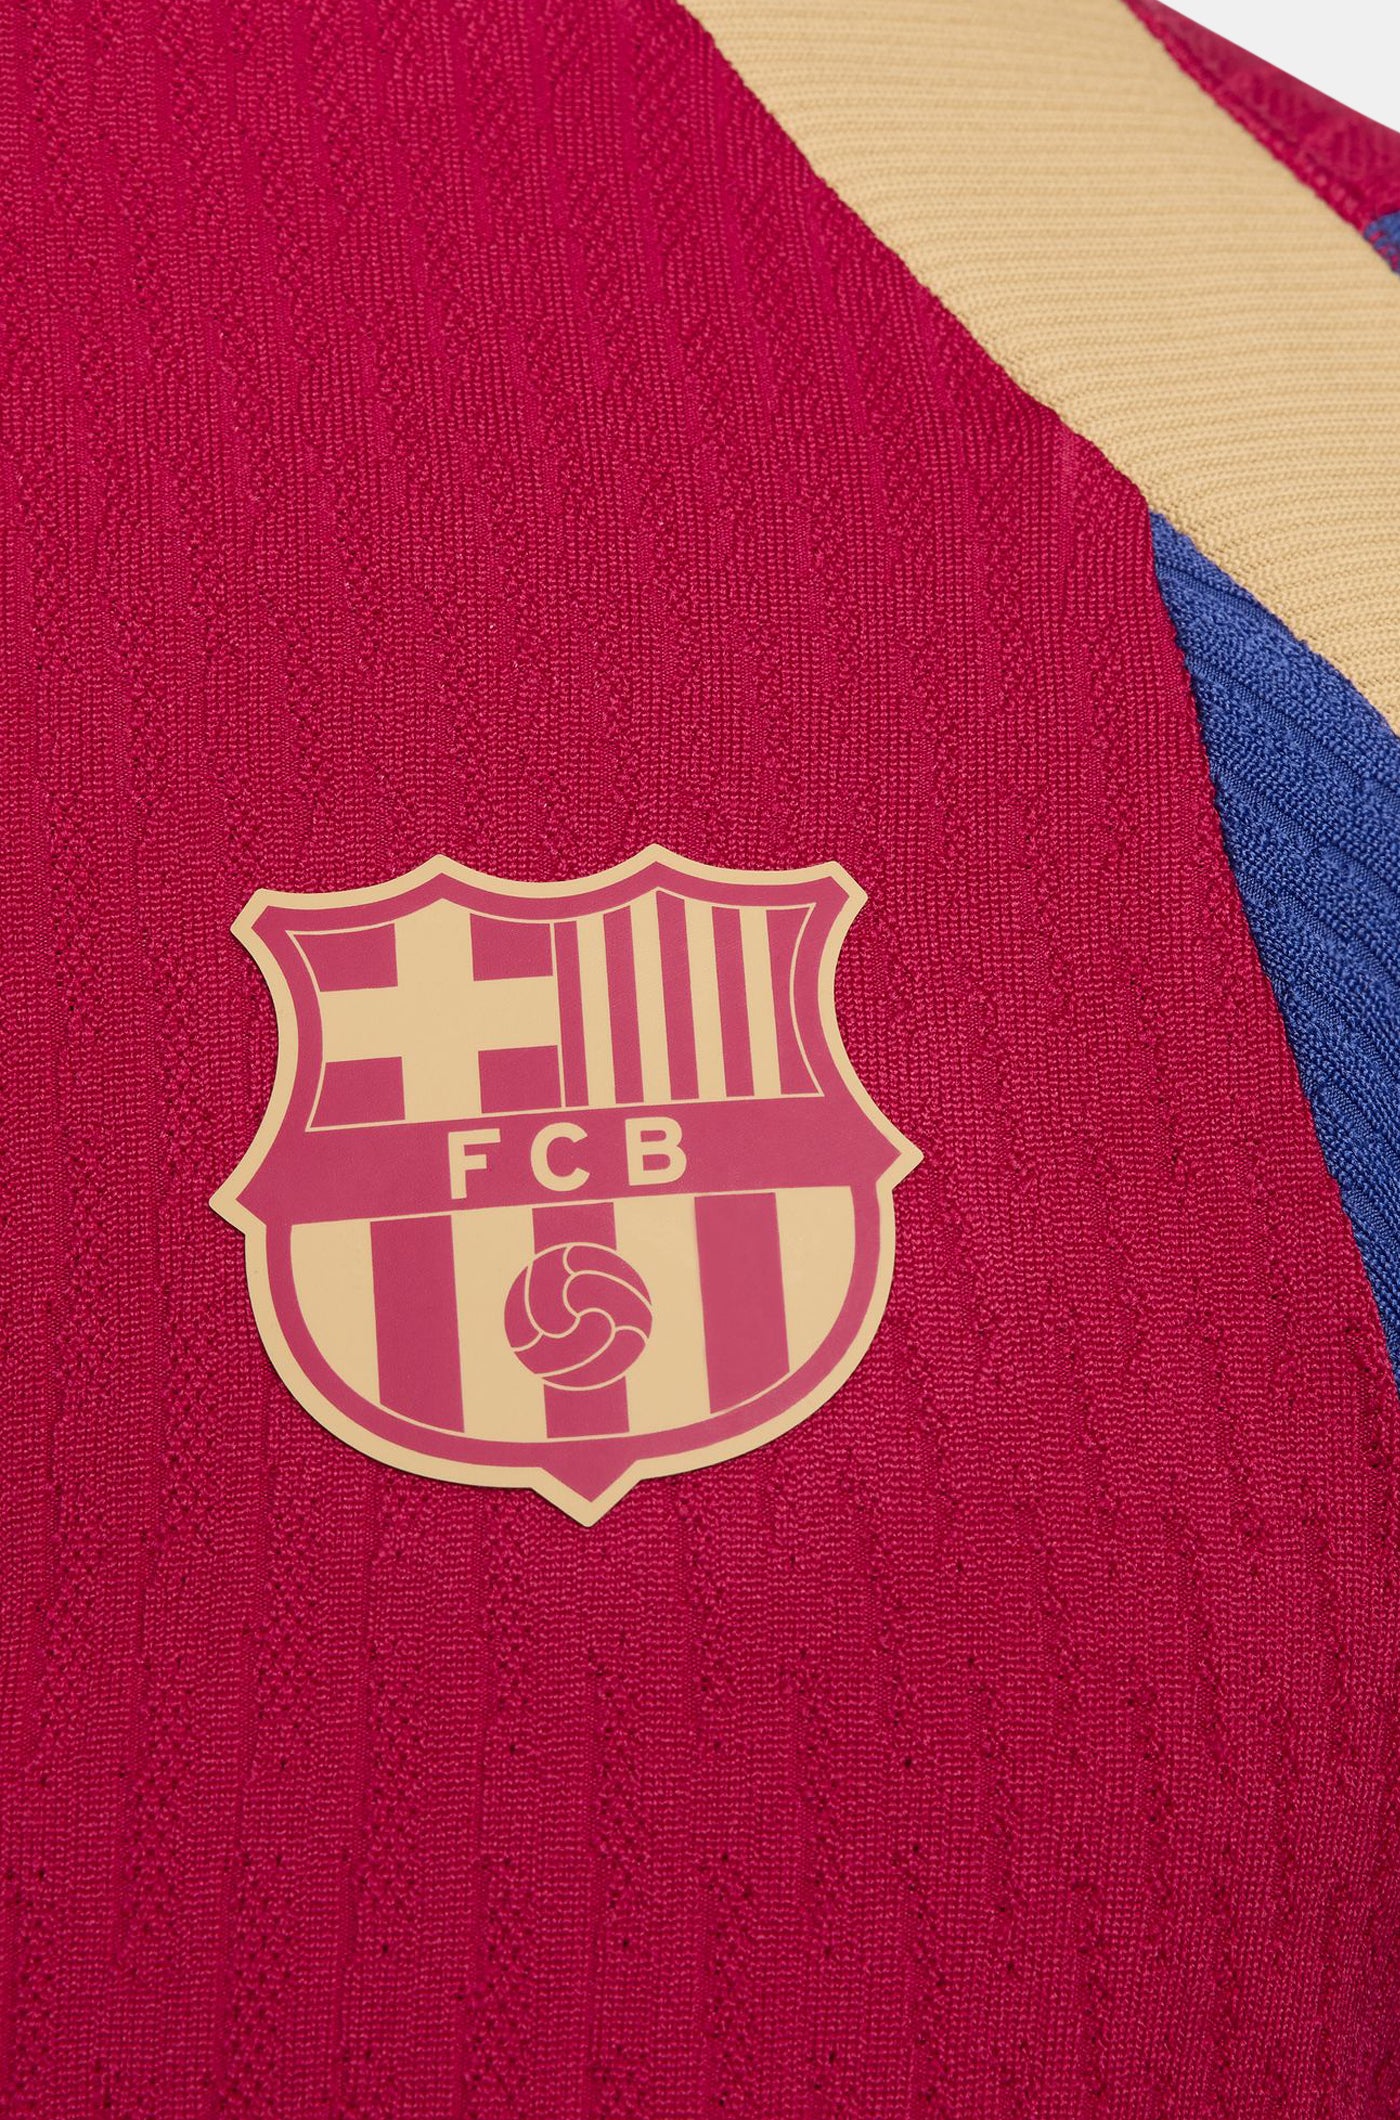 FC Barcelona garnet training sweatshirt 23/24 - Player's Edition